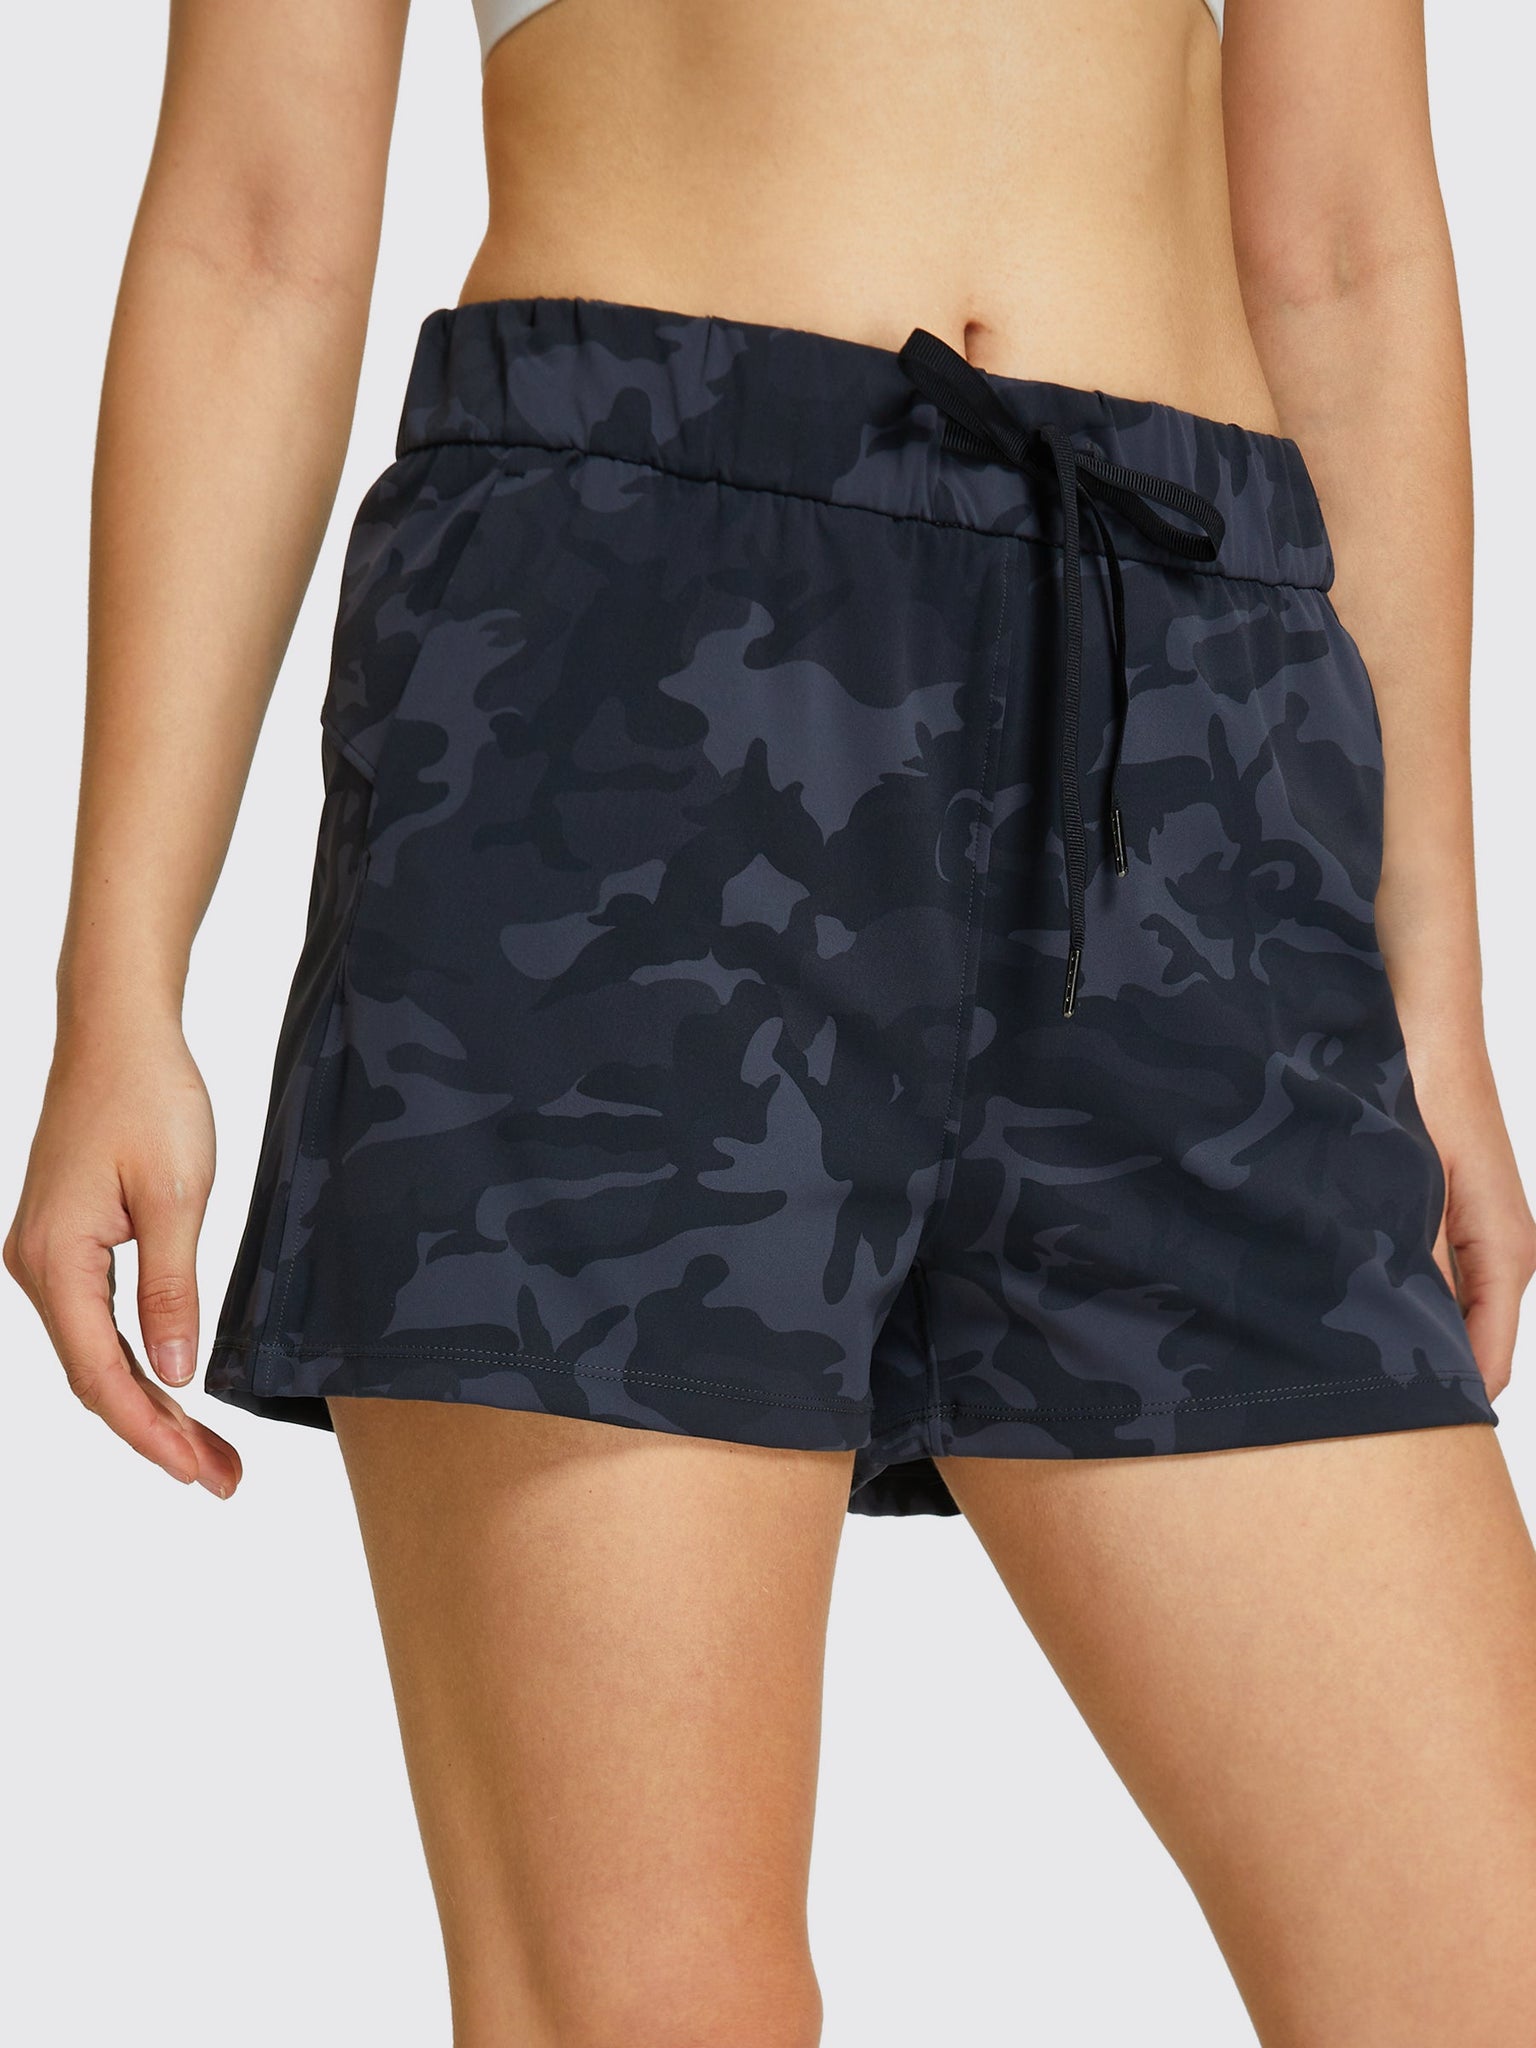 Willit Women's Summer 2.5 Inch Shorts_Black Camo3